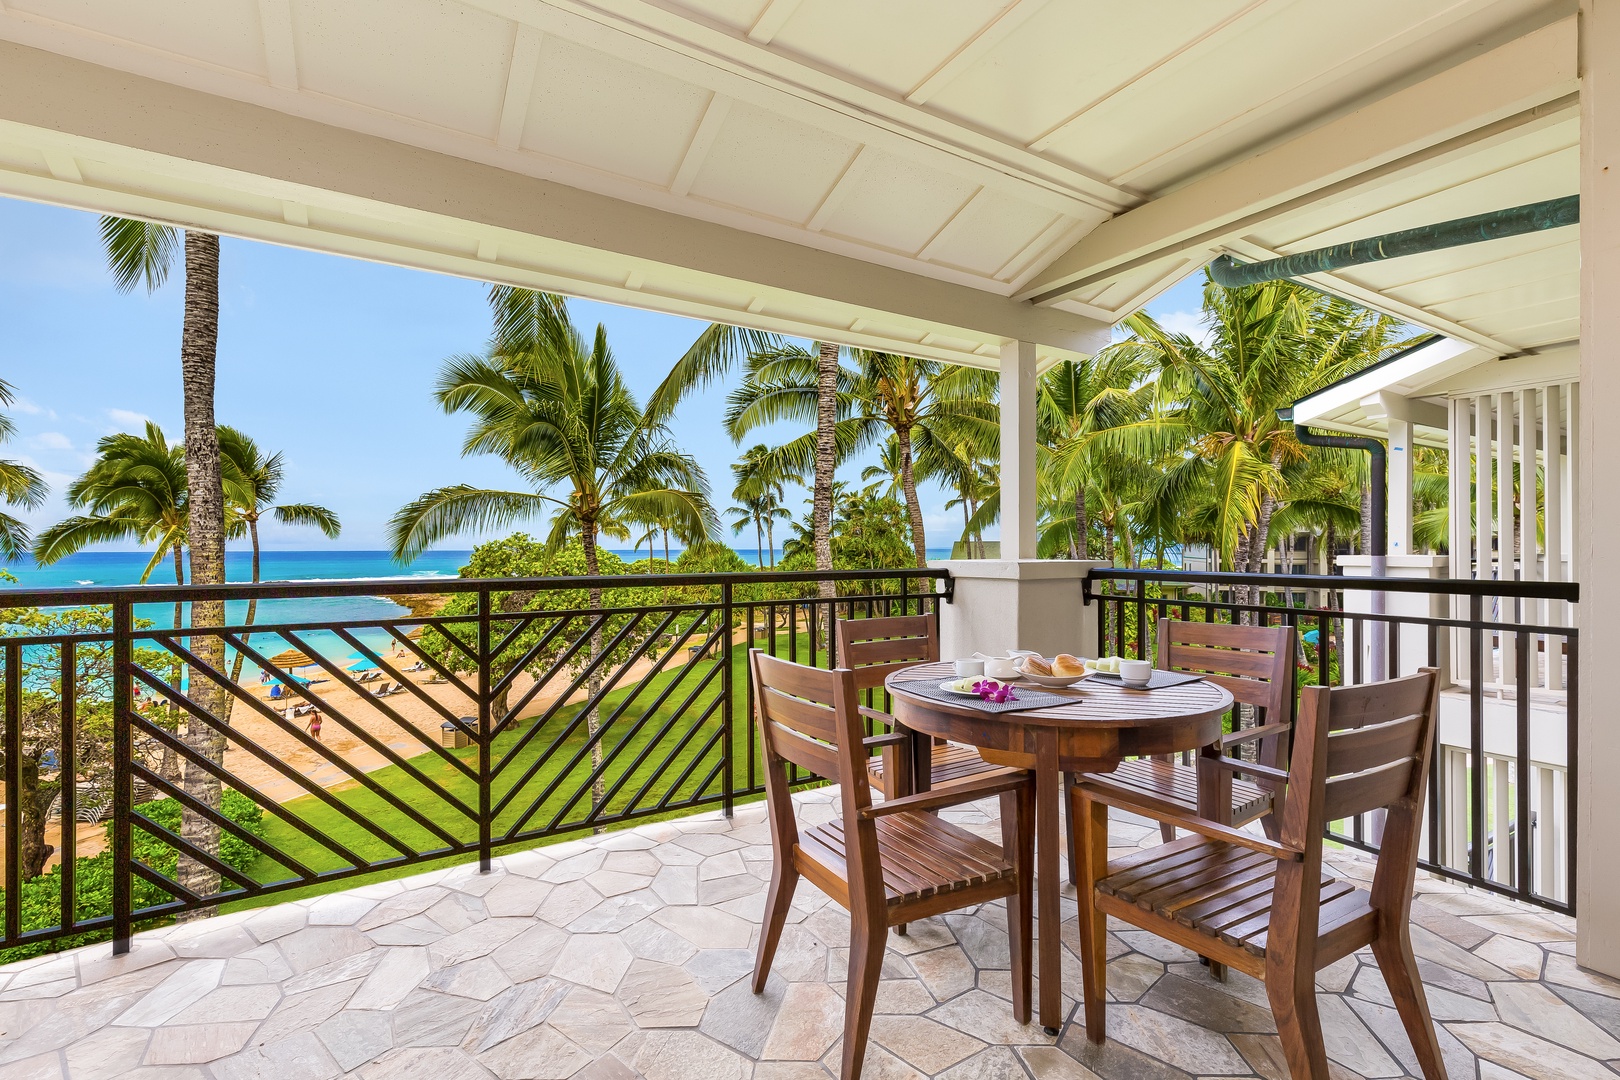 Kahuku Vacation Rentals, OFB Turtle Bay Villas 301 - Experience ultimate Hawaiian getaway luxury at our 3rd-floor, recently refurbished Villa 301